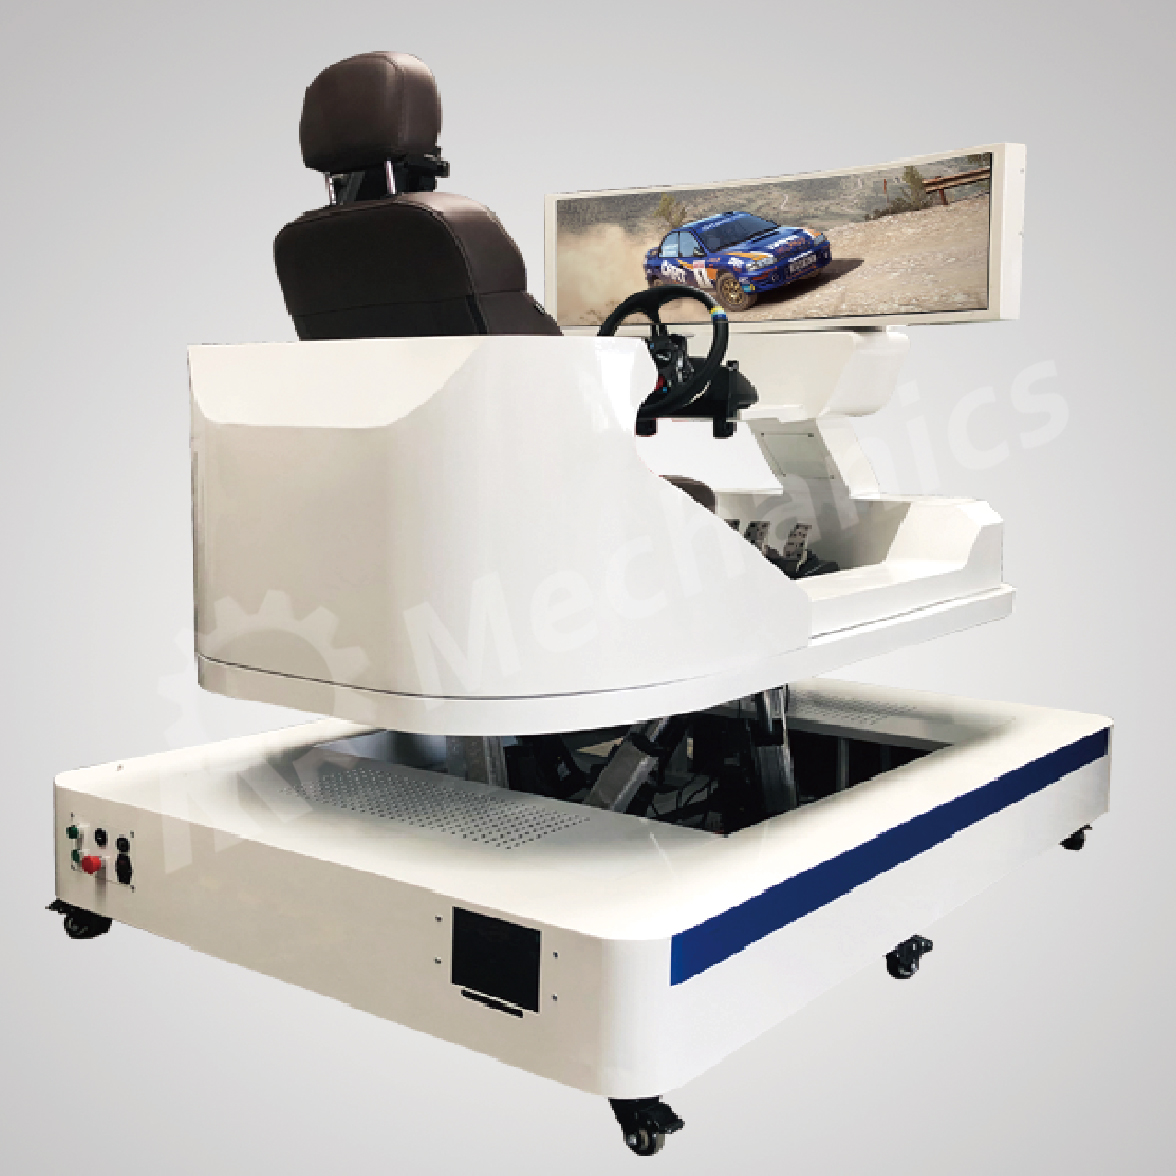 6DOF autonomous driving simulator